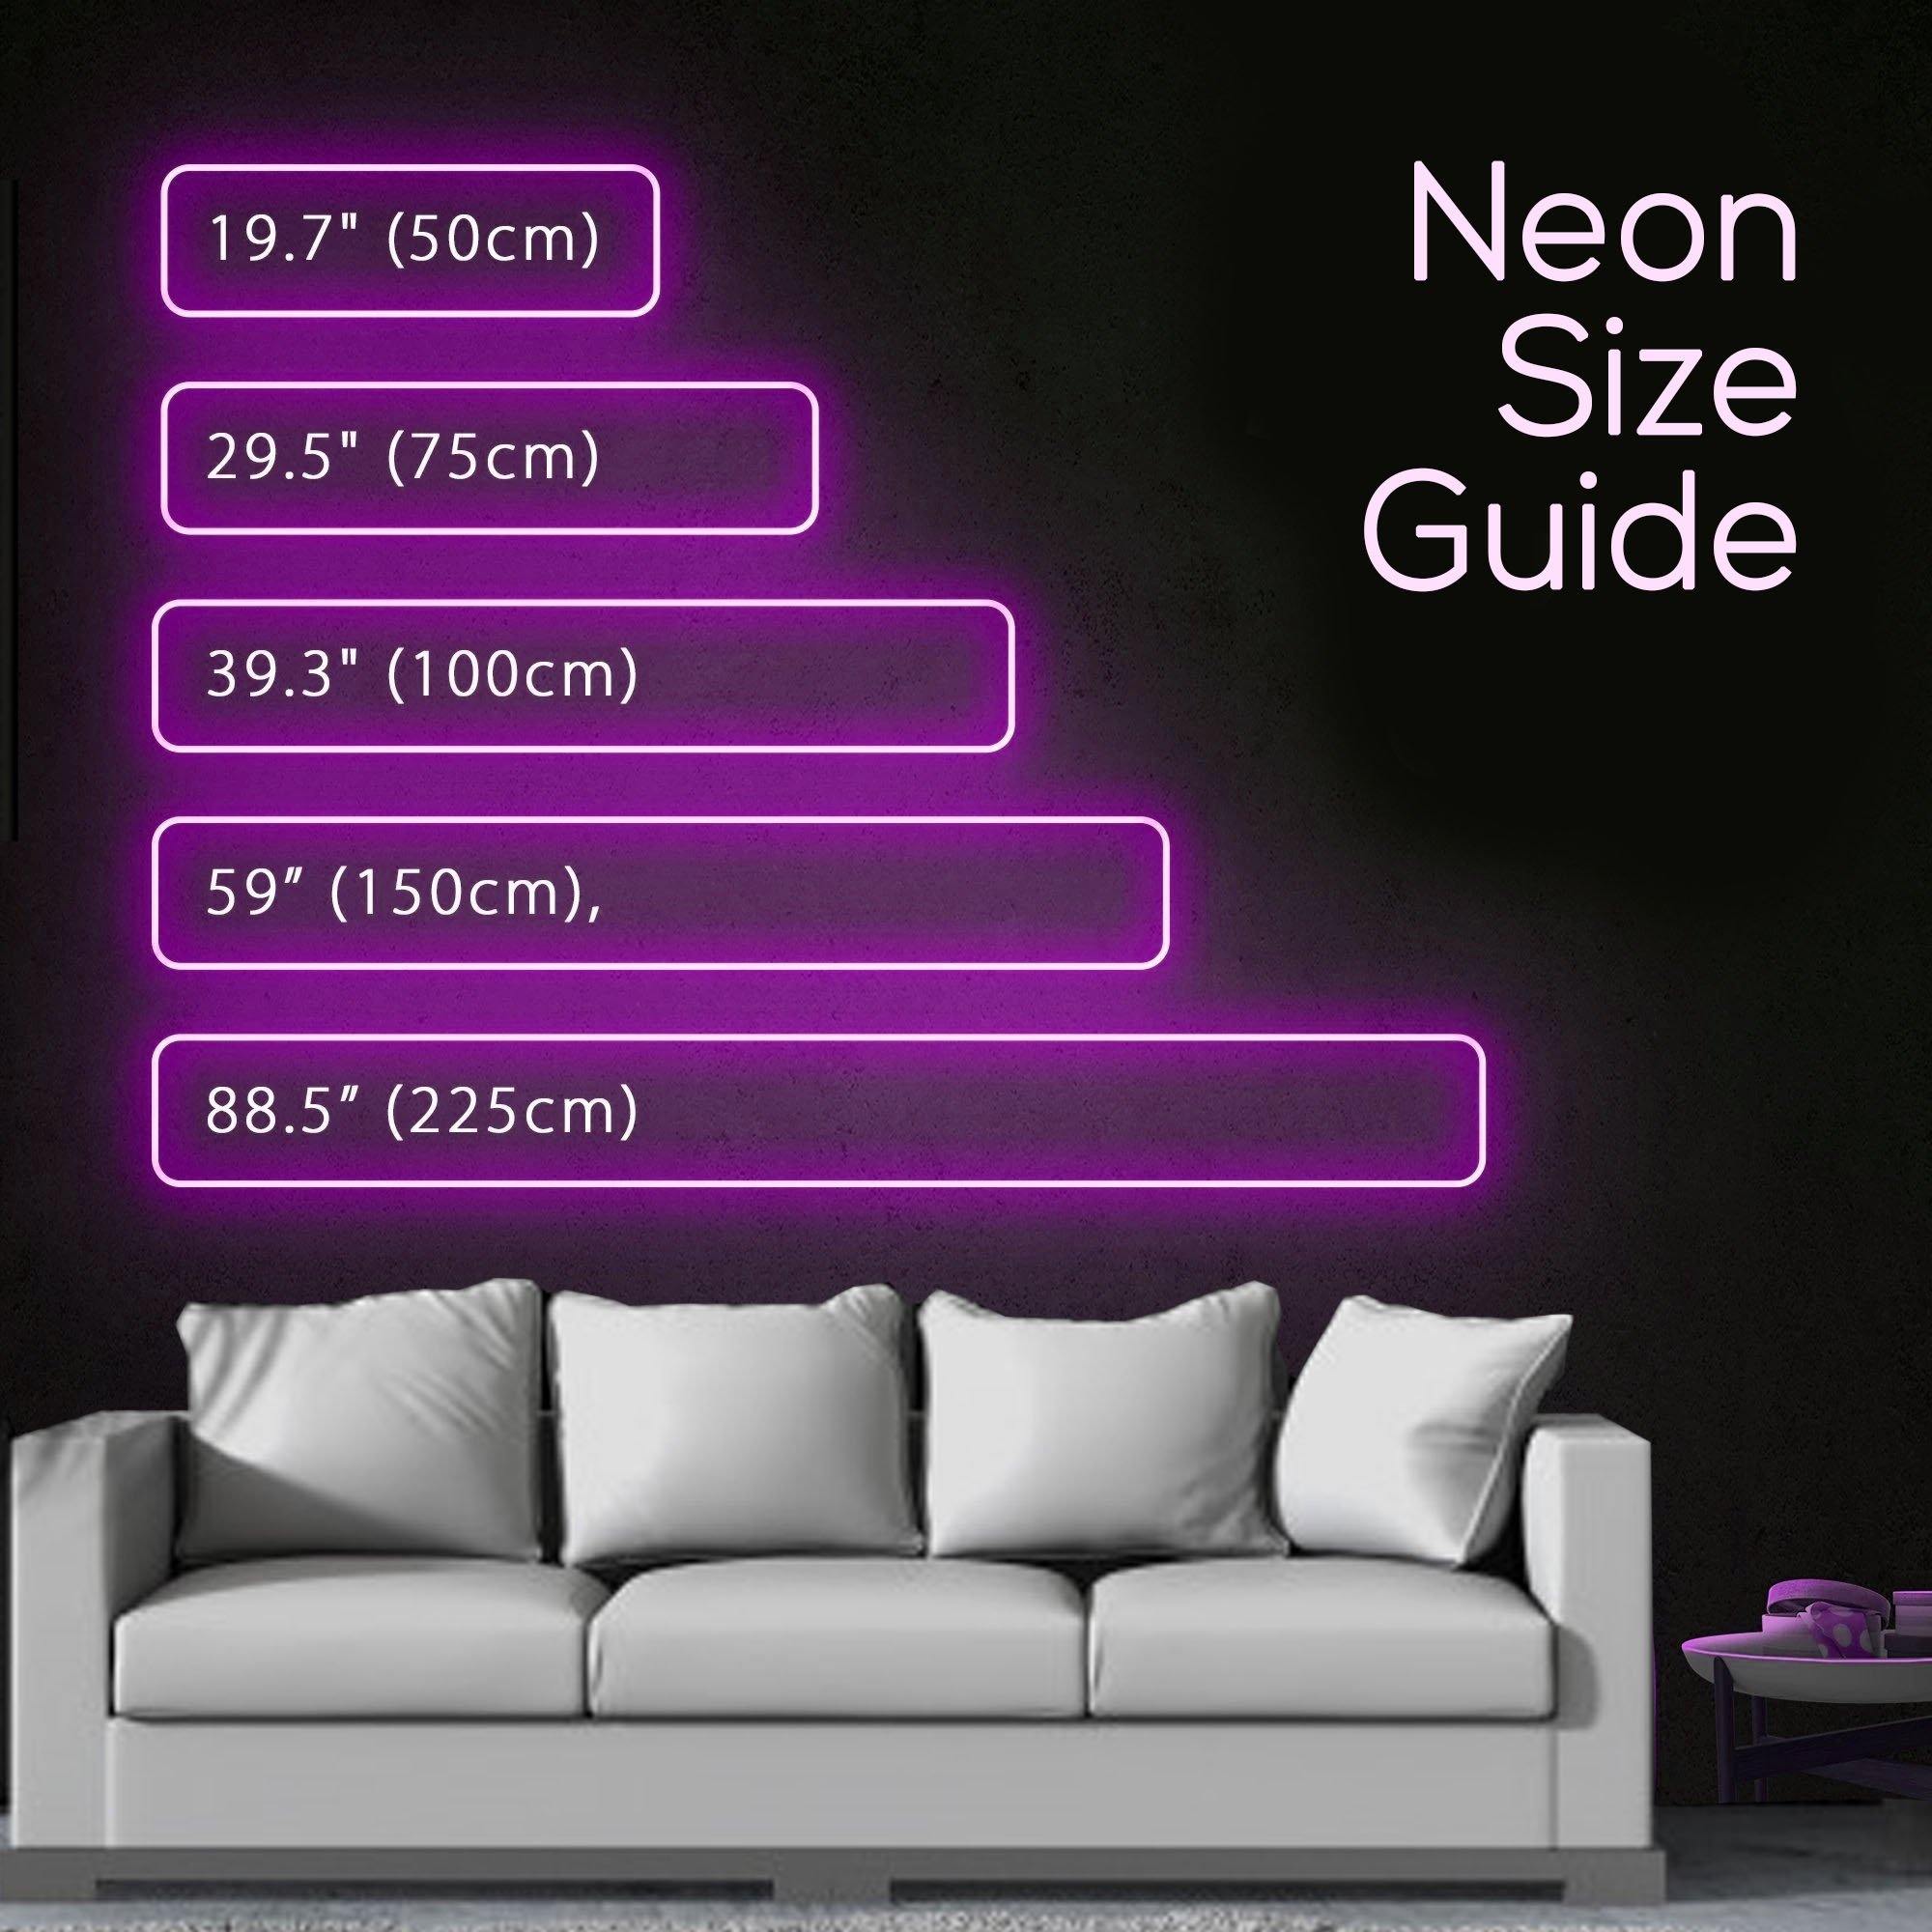 Hello Gorgeous Neon Sign - NeonFerry